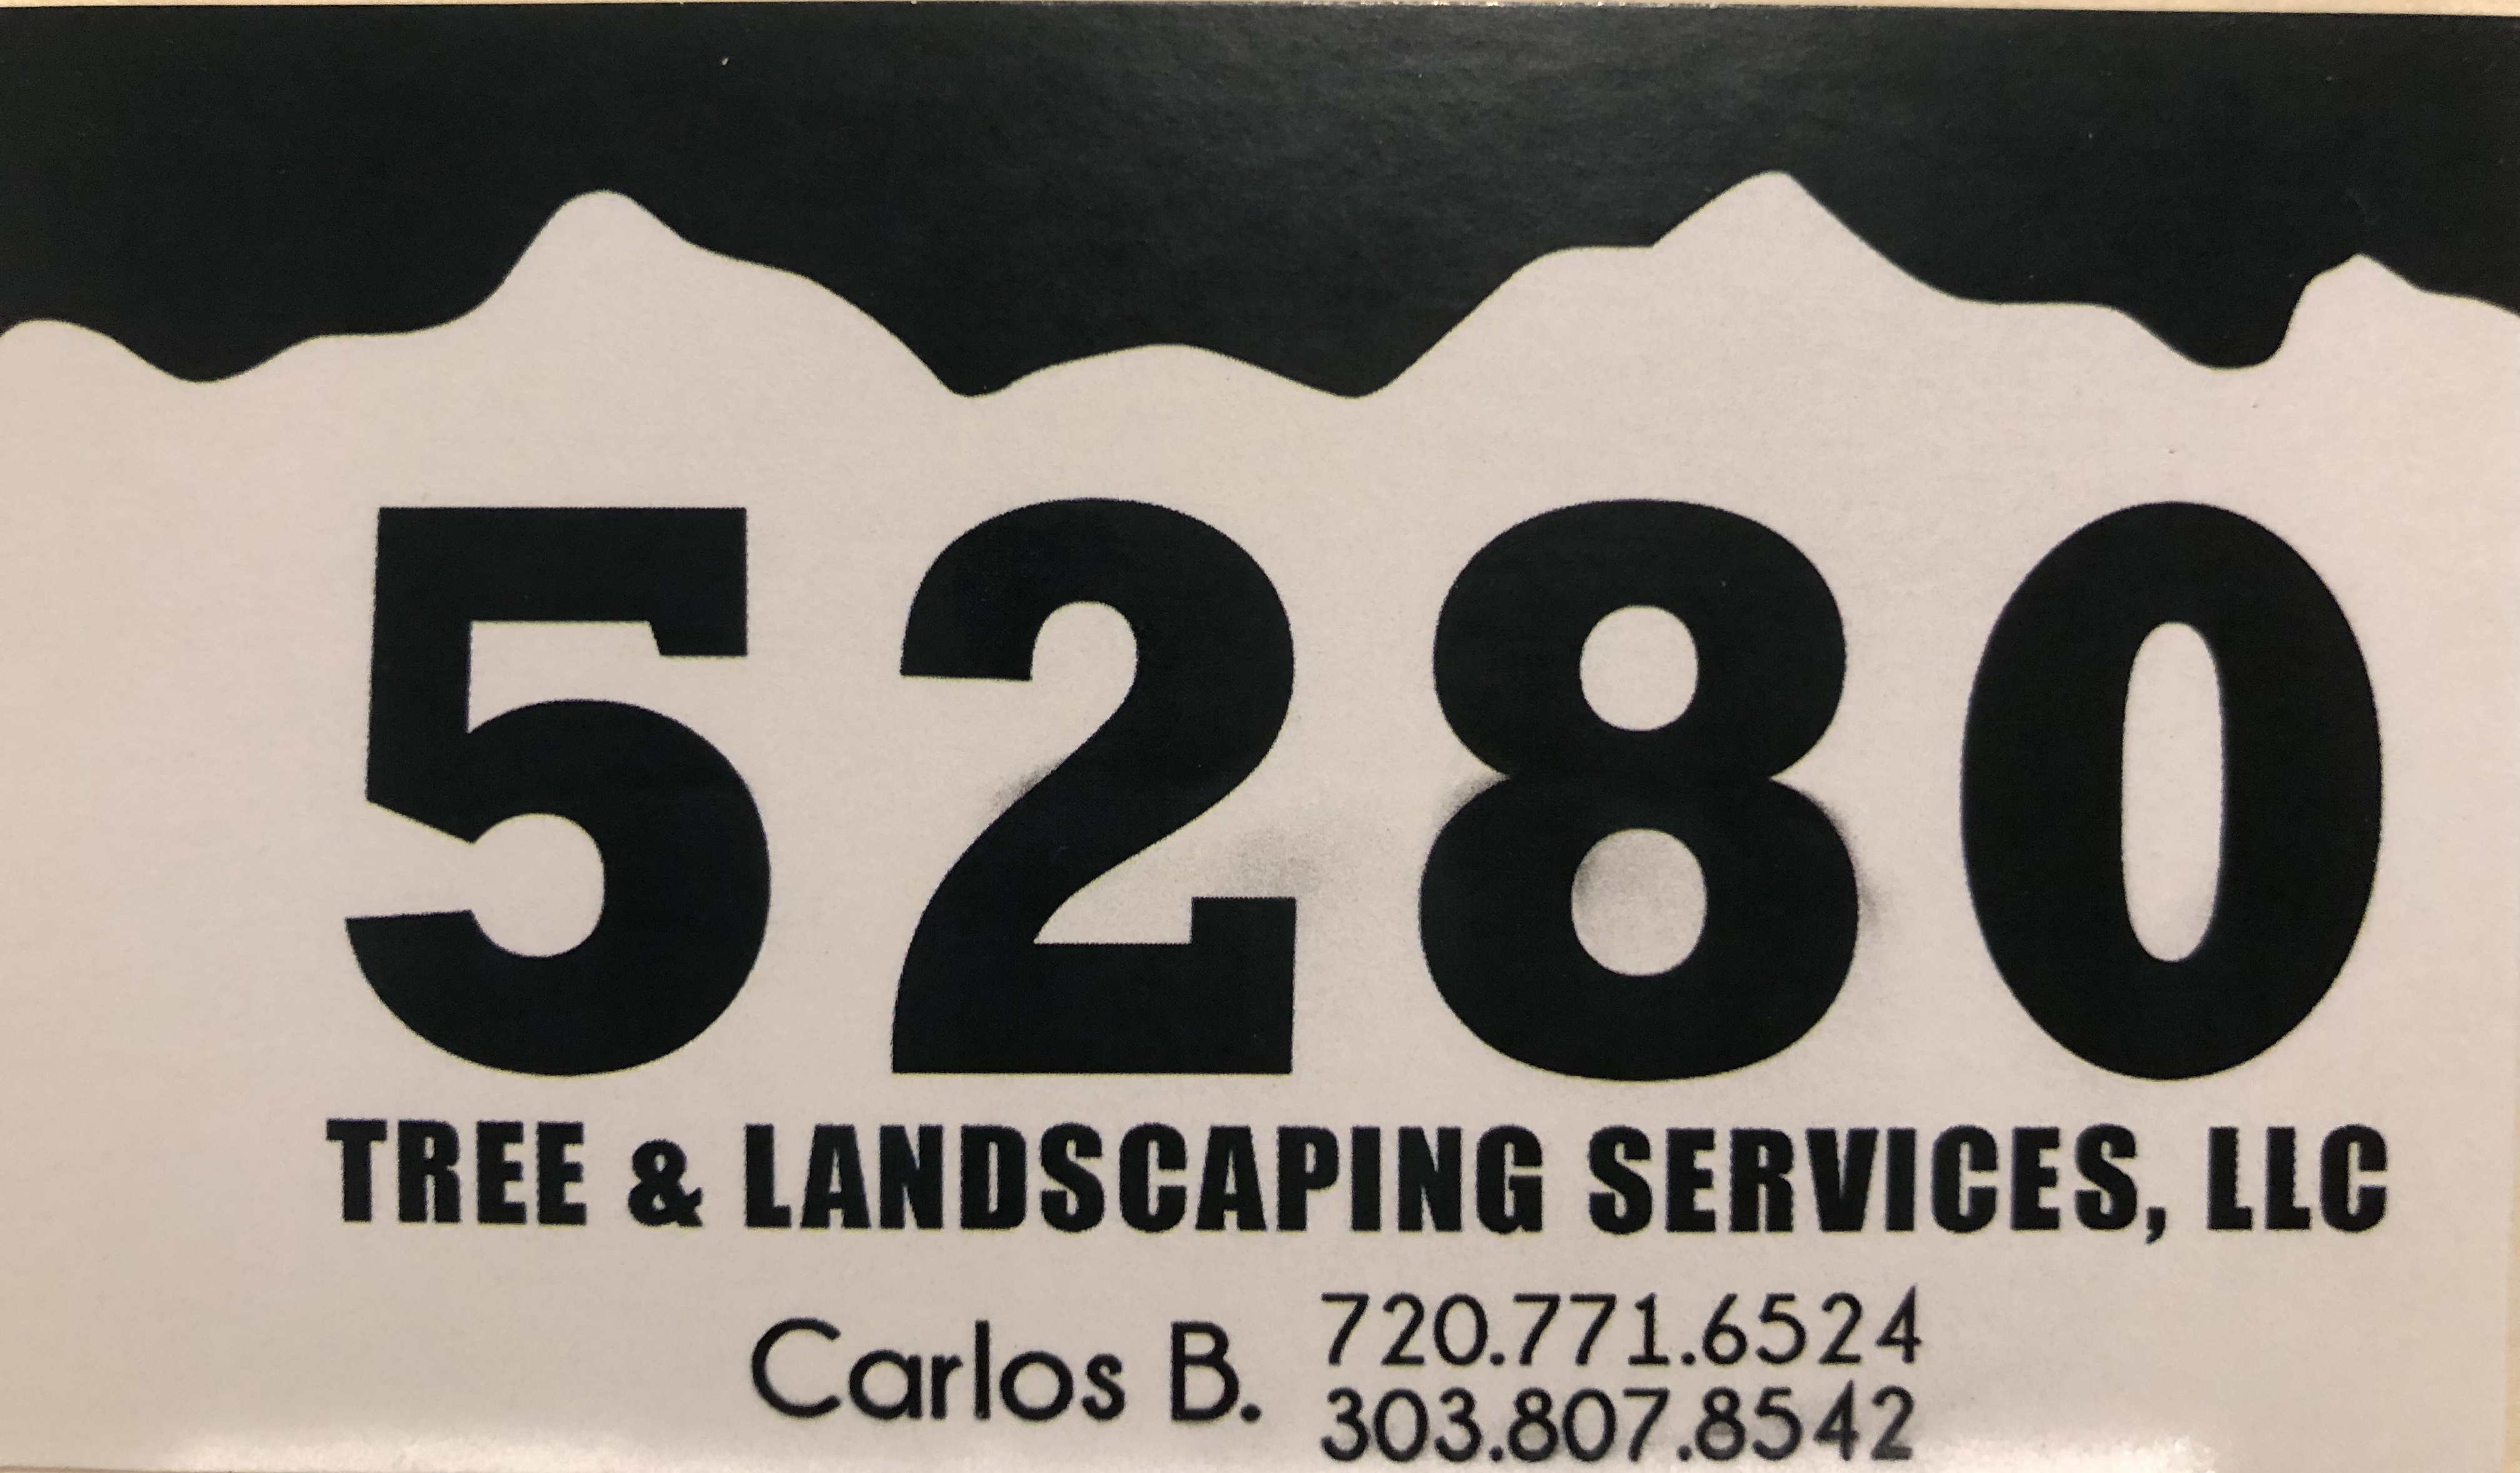 5280 Tree & Landscaping Services, LLC Logo